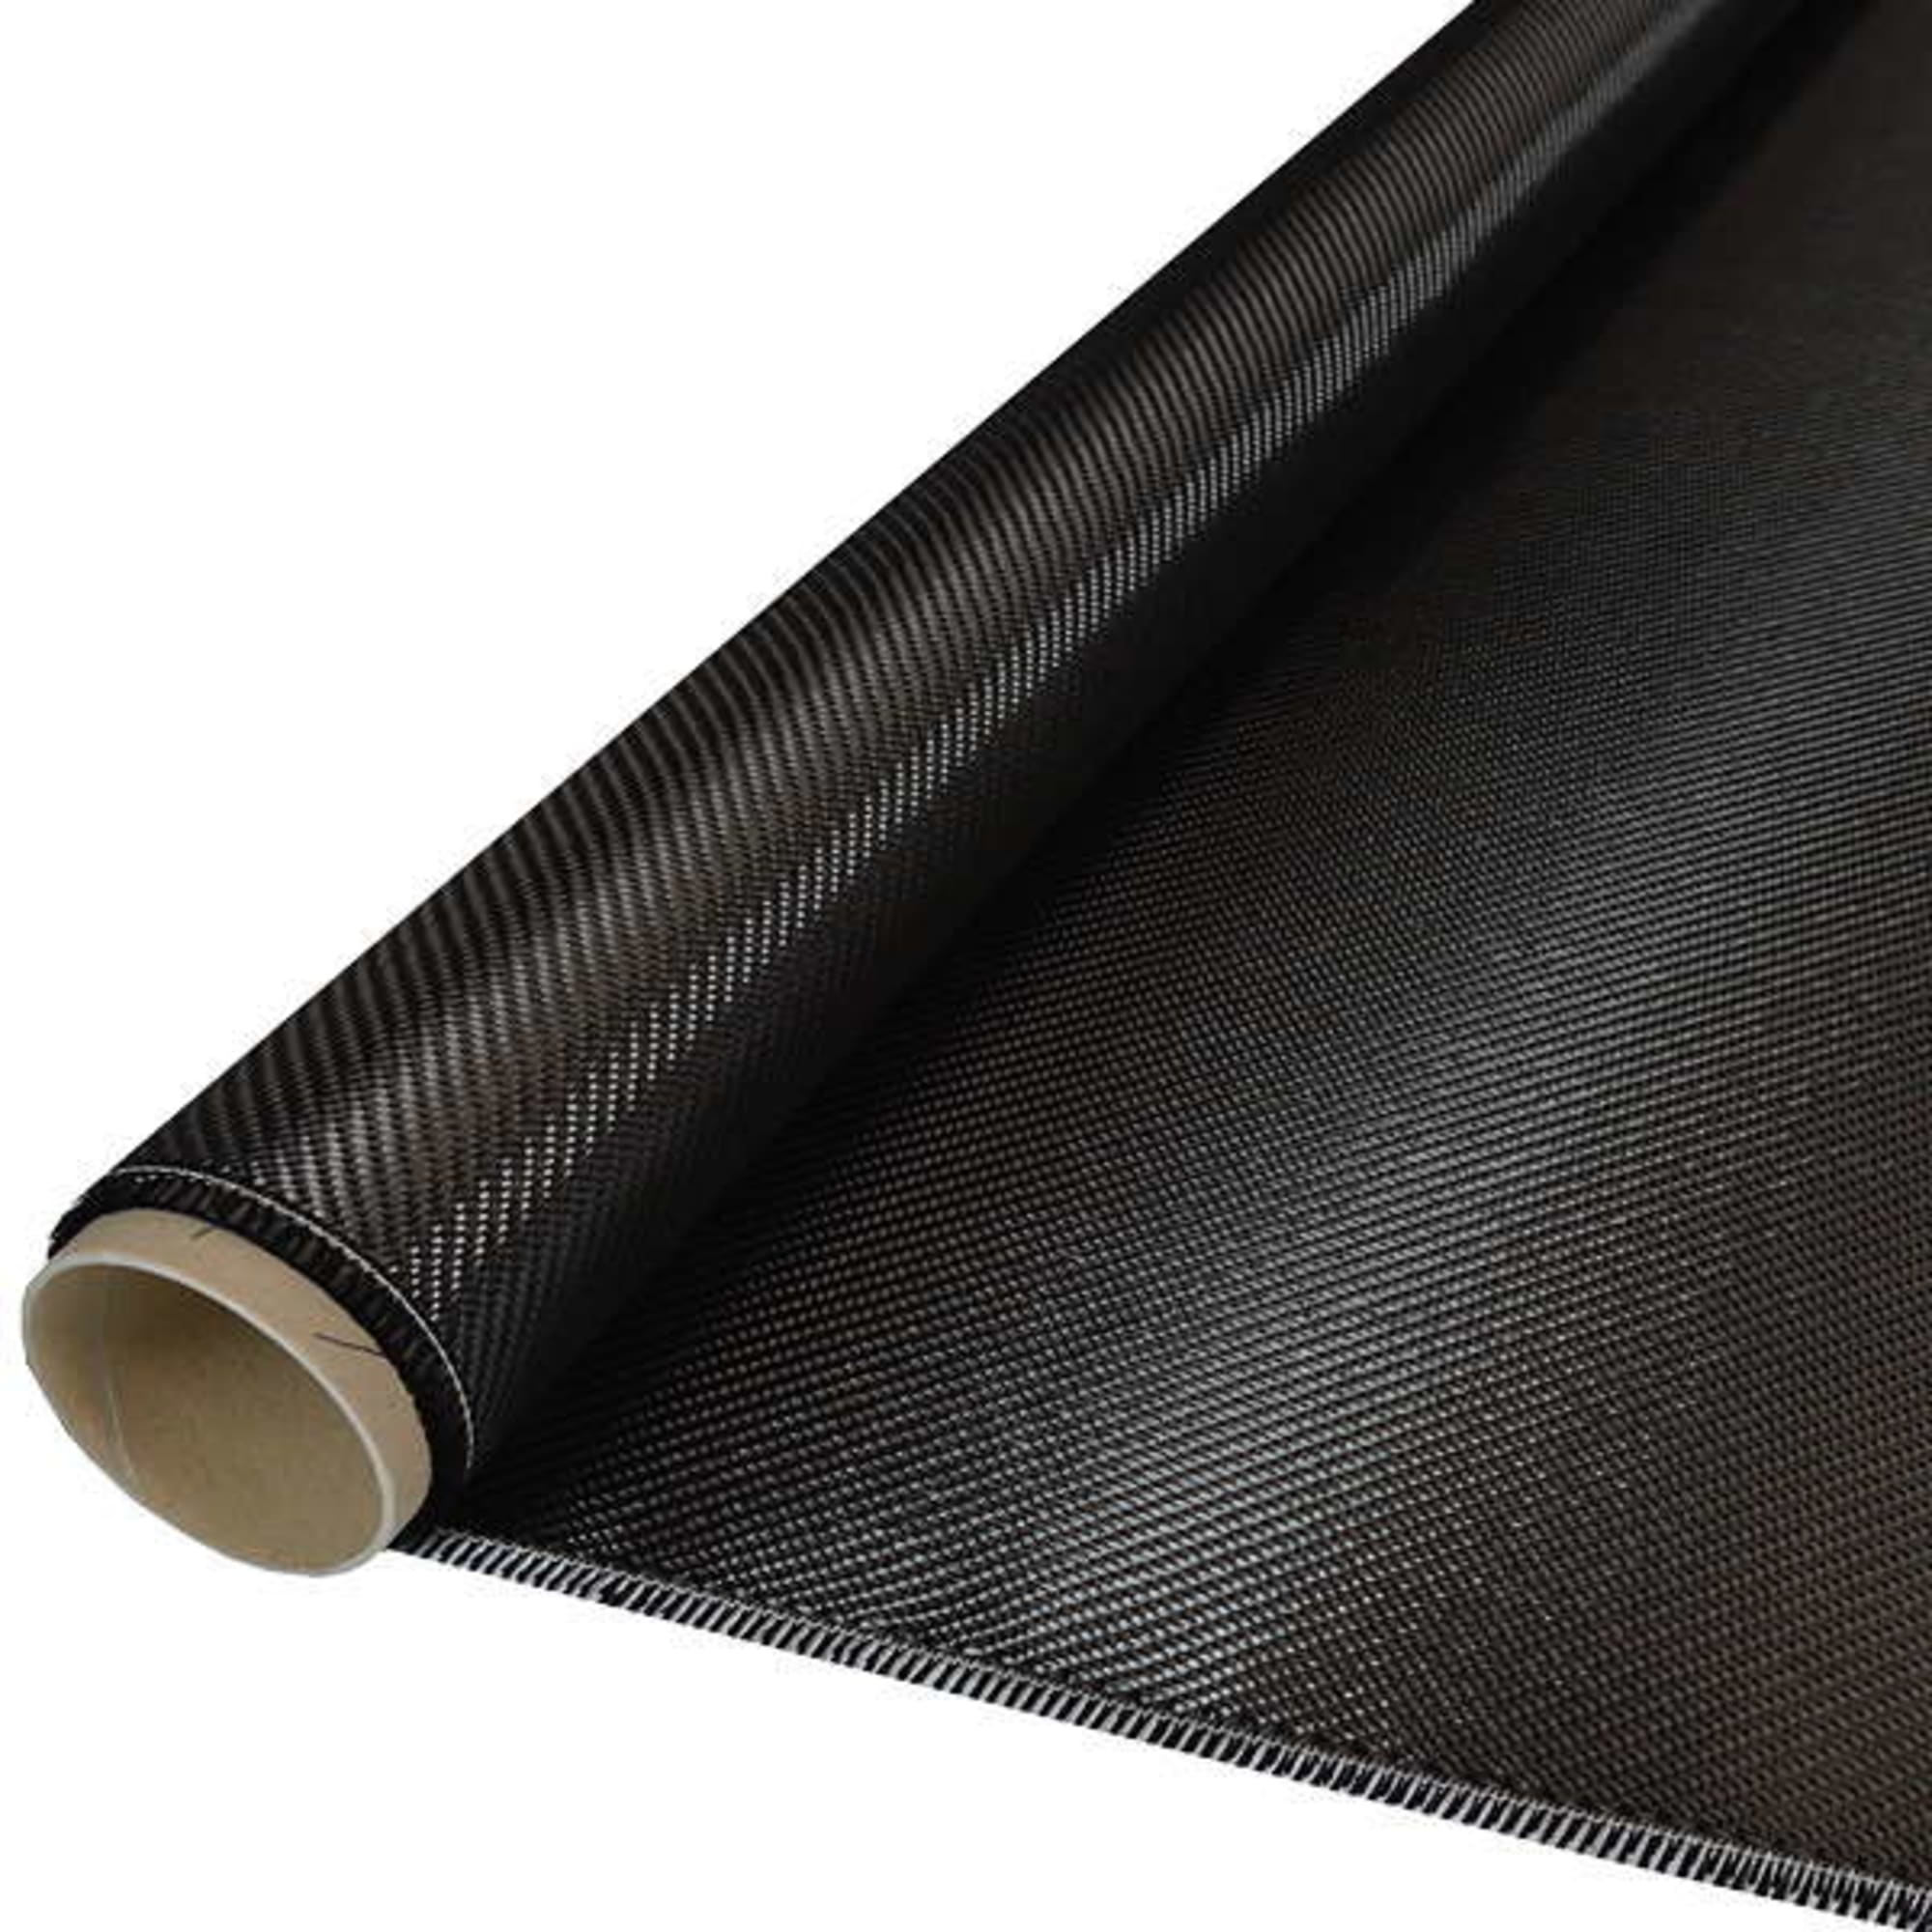 Carbon fabric 245 g/m² (twill weave) 100 cm, image 2